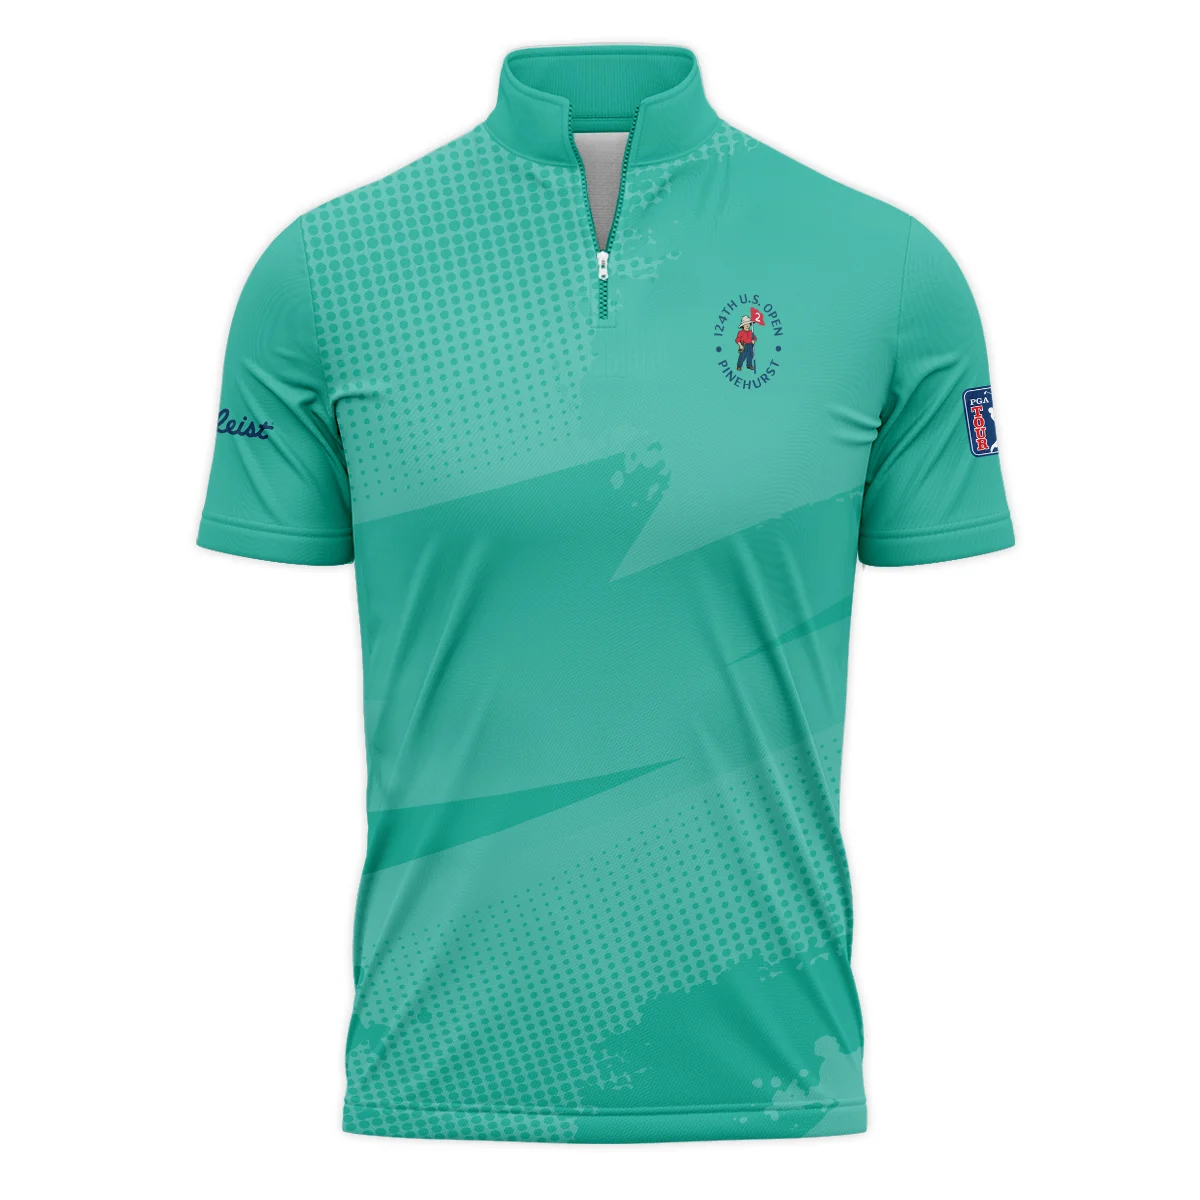 Golf Sport Pattern Green Mix Color 124th U.S. Open Pinehurst Ping Polo Shirt Style Classic